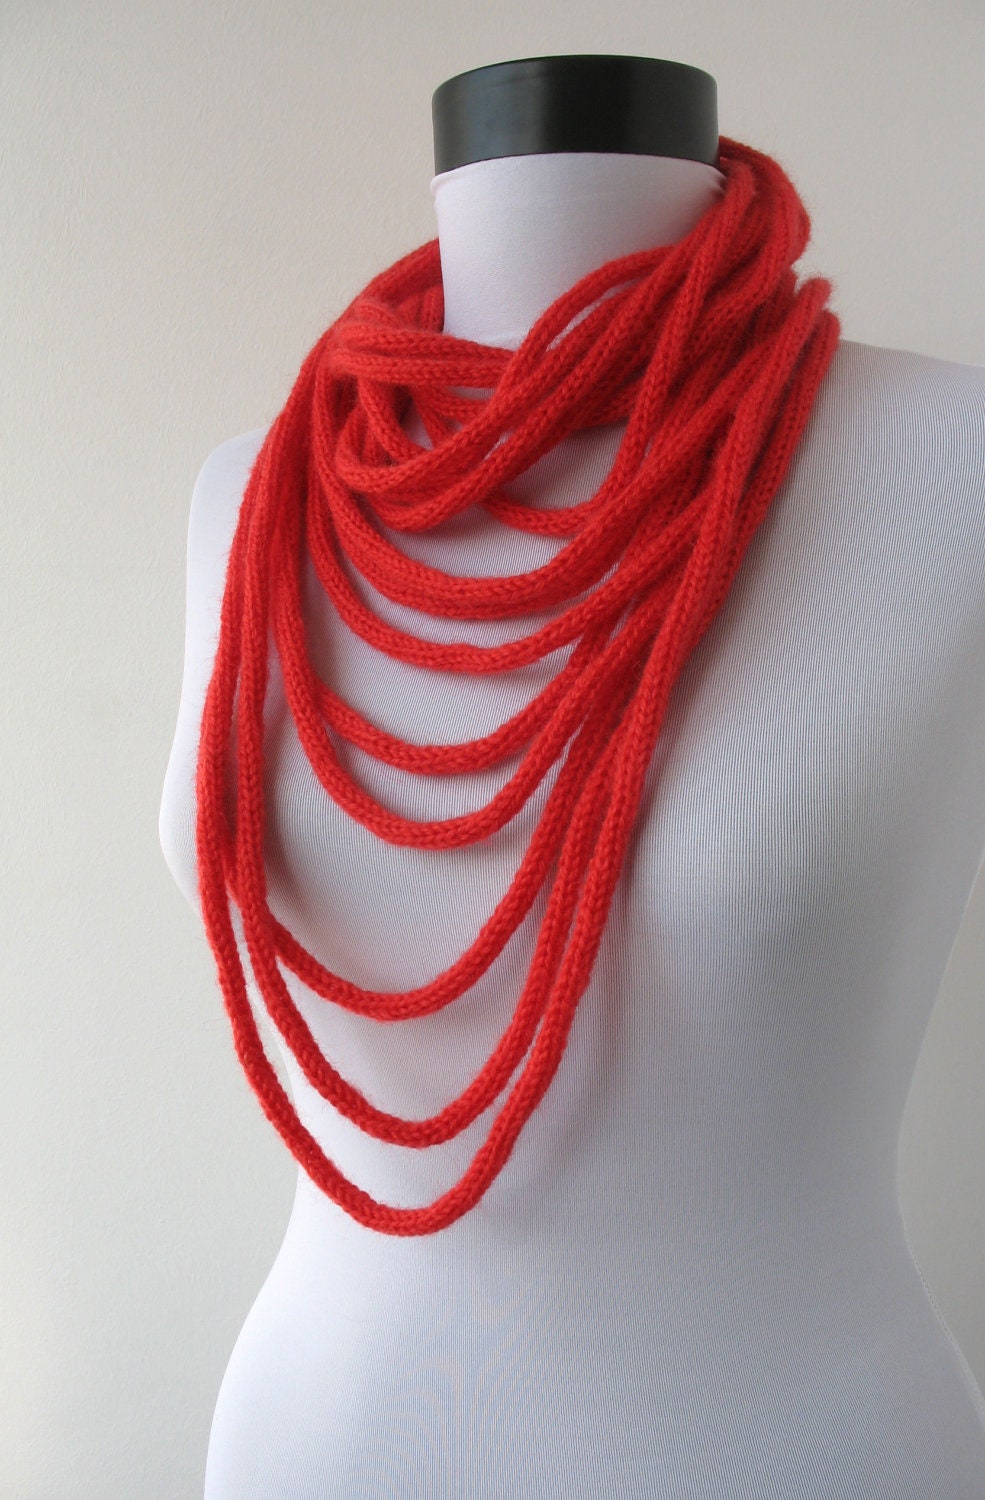 30% OFF SALE - Knit Scarf Necklace - loop scarf - infinity scarf - neck warmer -  knit scarflette - in fire red (WAS 25) - DreamList